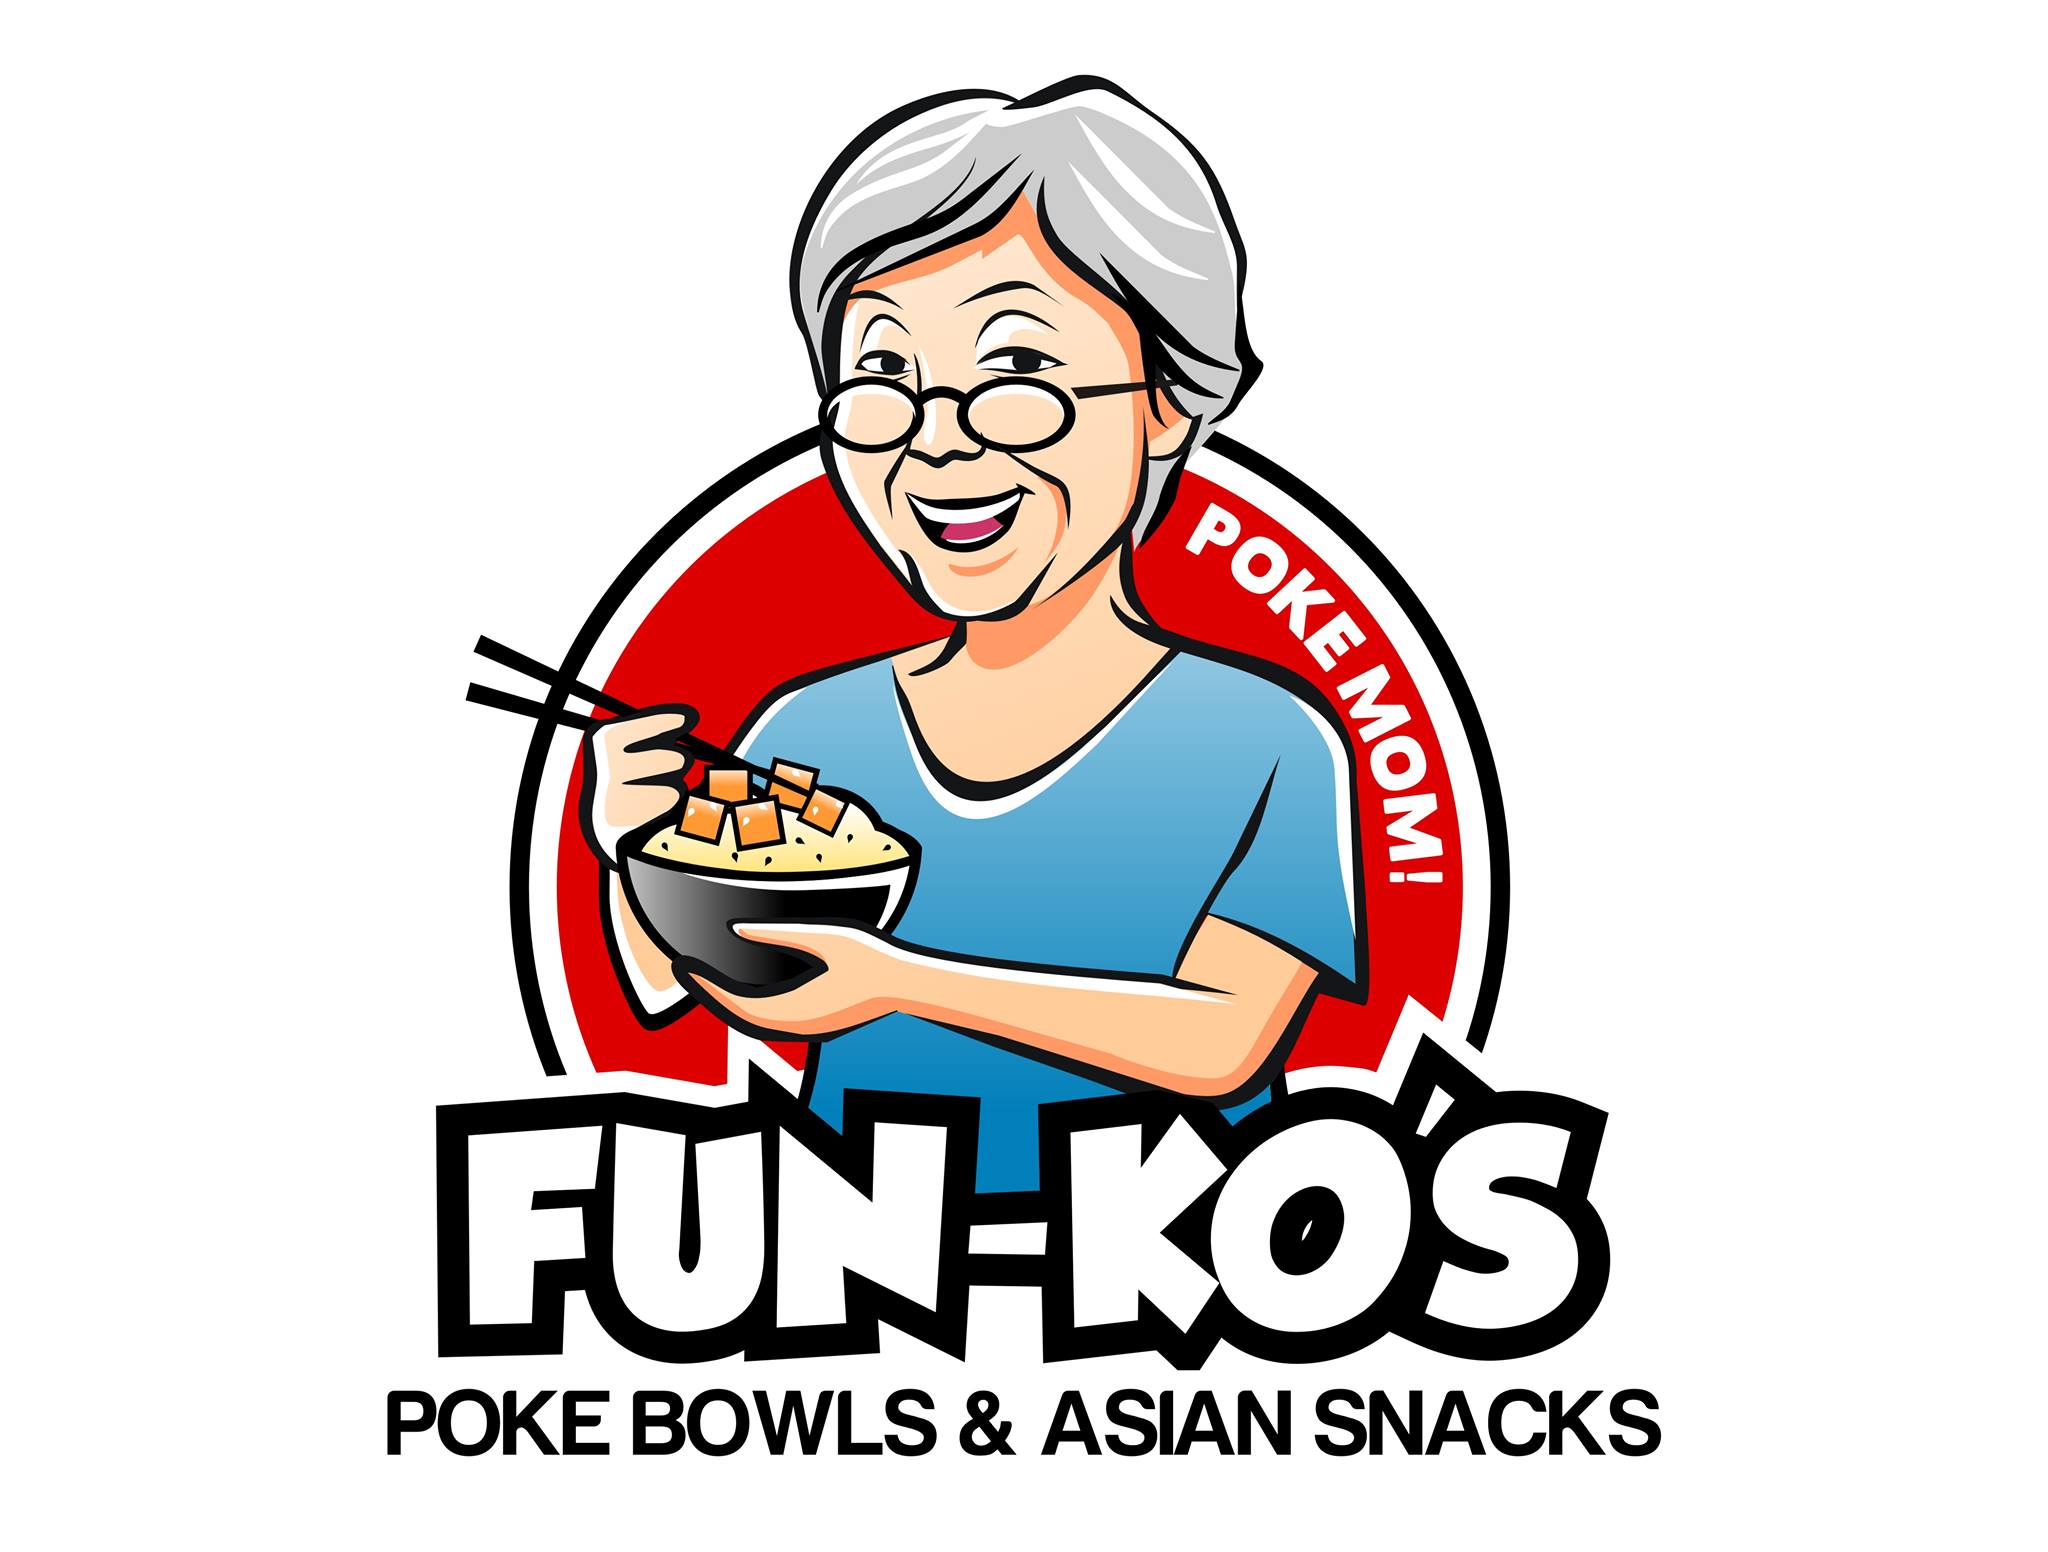 Funko’s Poke Bowls & Asian Snacks